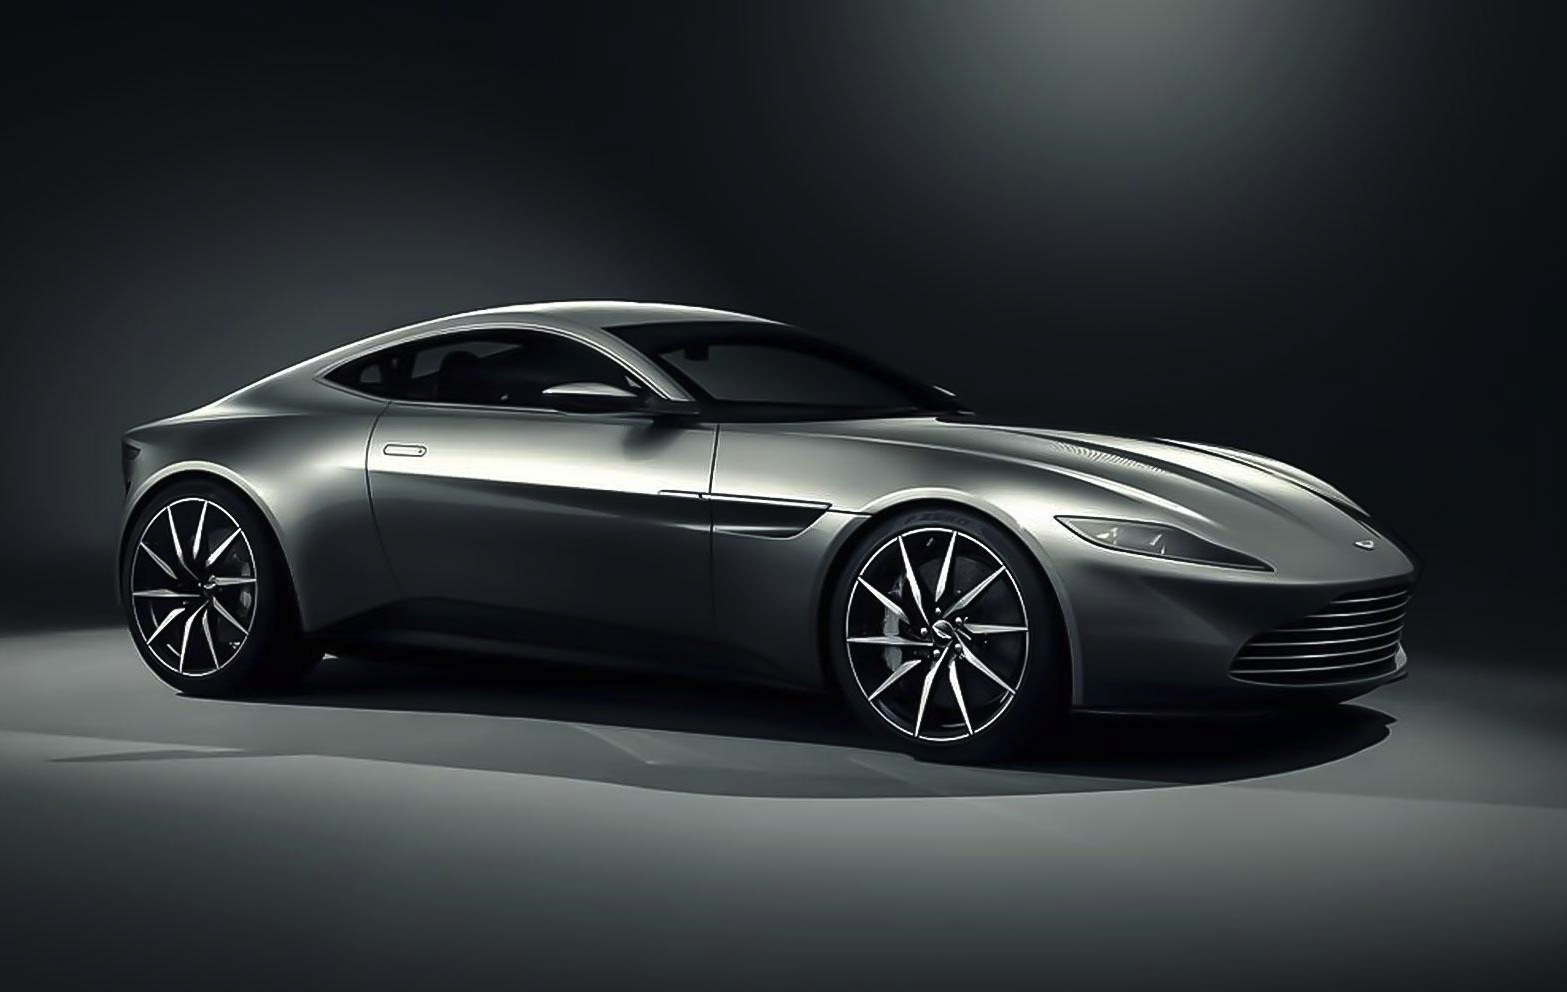 Aston Martin DB10 created for Spectre, James Bond film